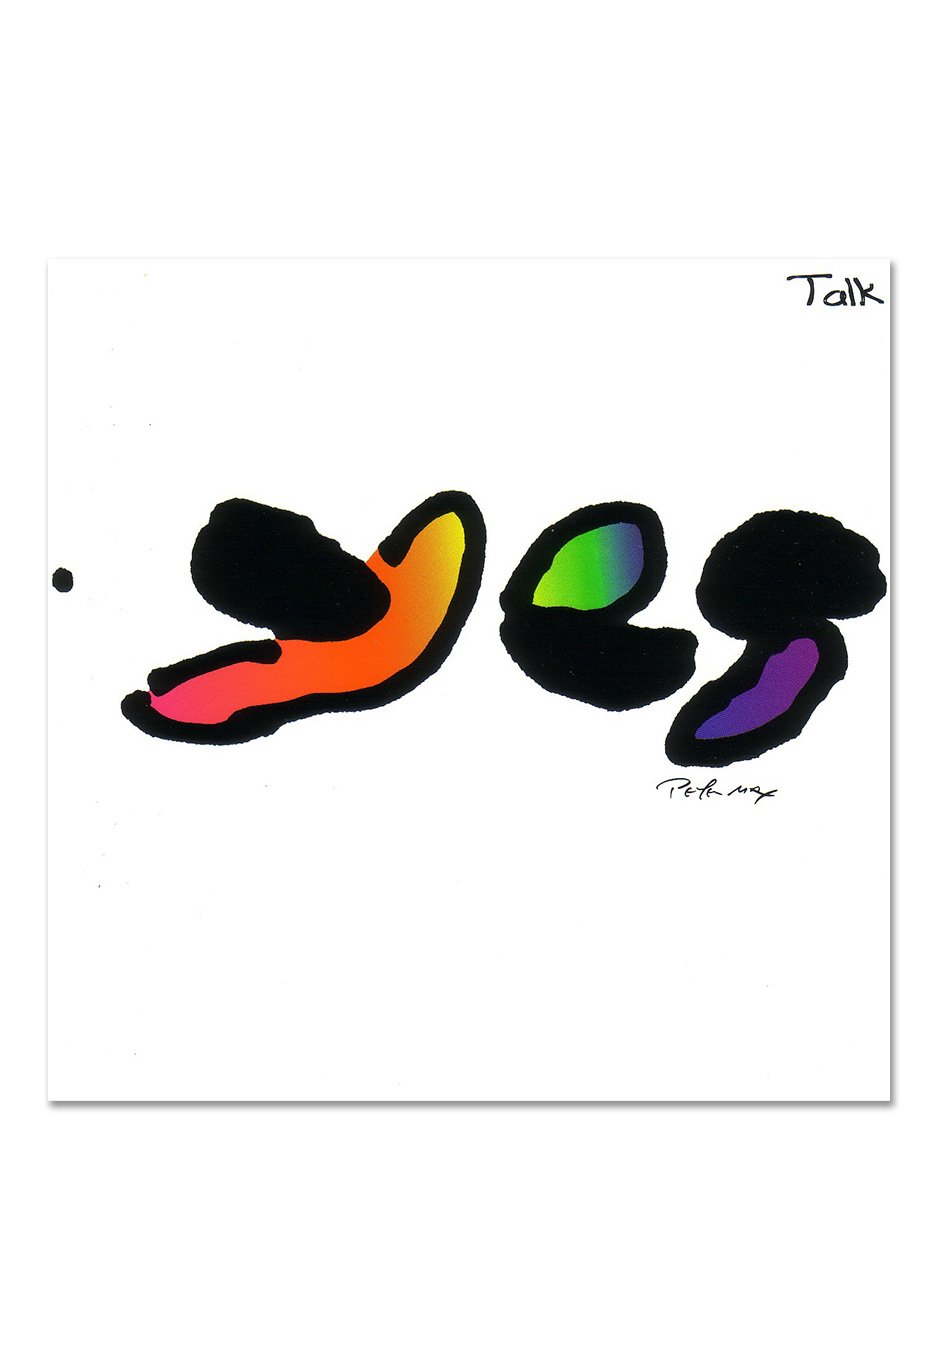 Yes - Talk (30th Anniversary Edition) Ltd. Deluxe - CD Box Set